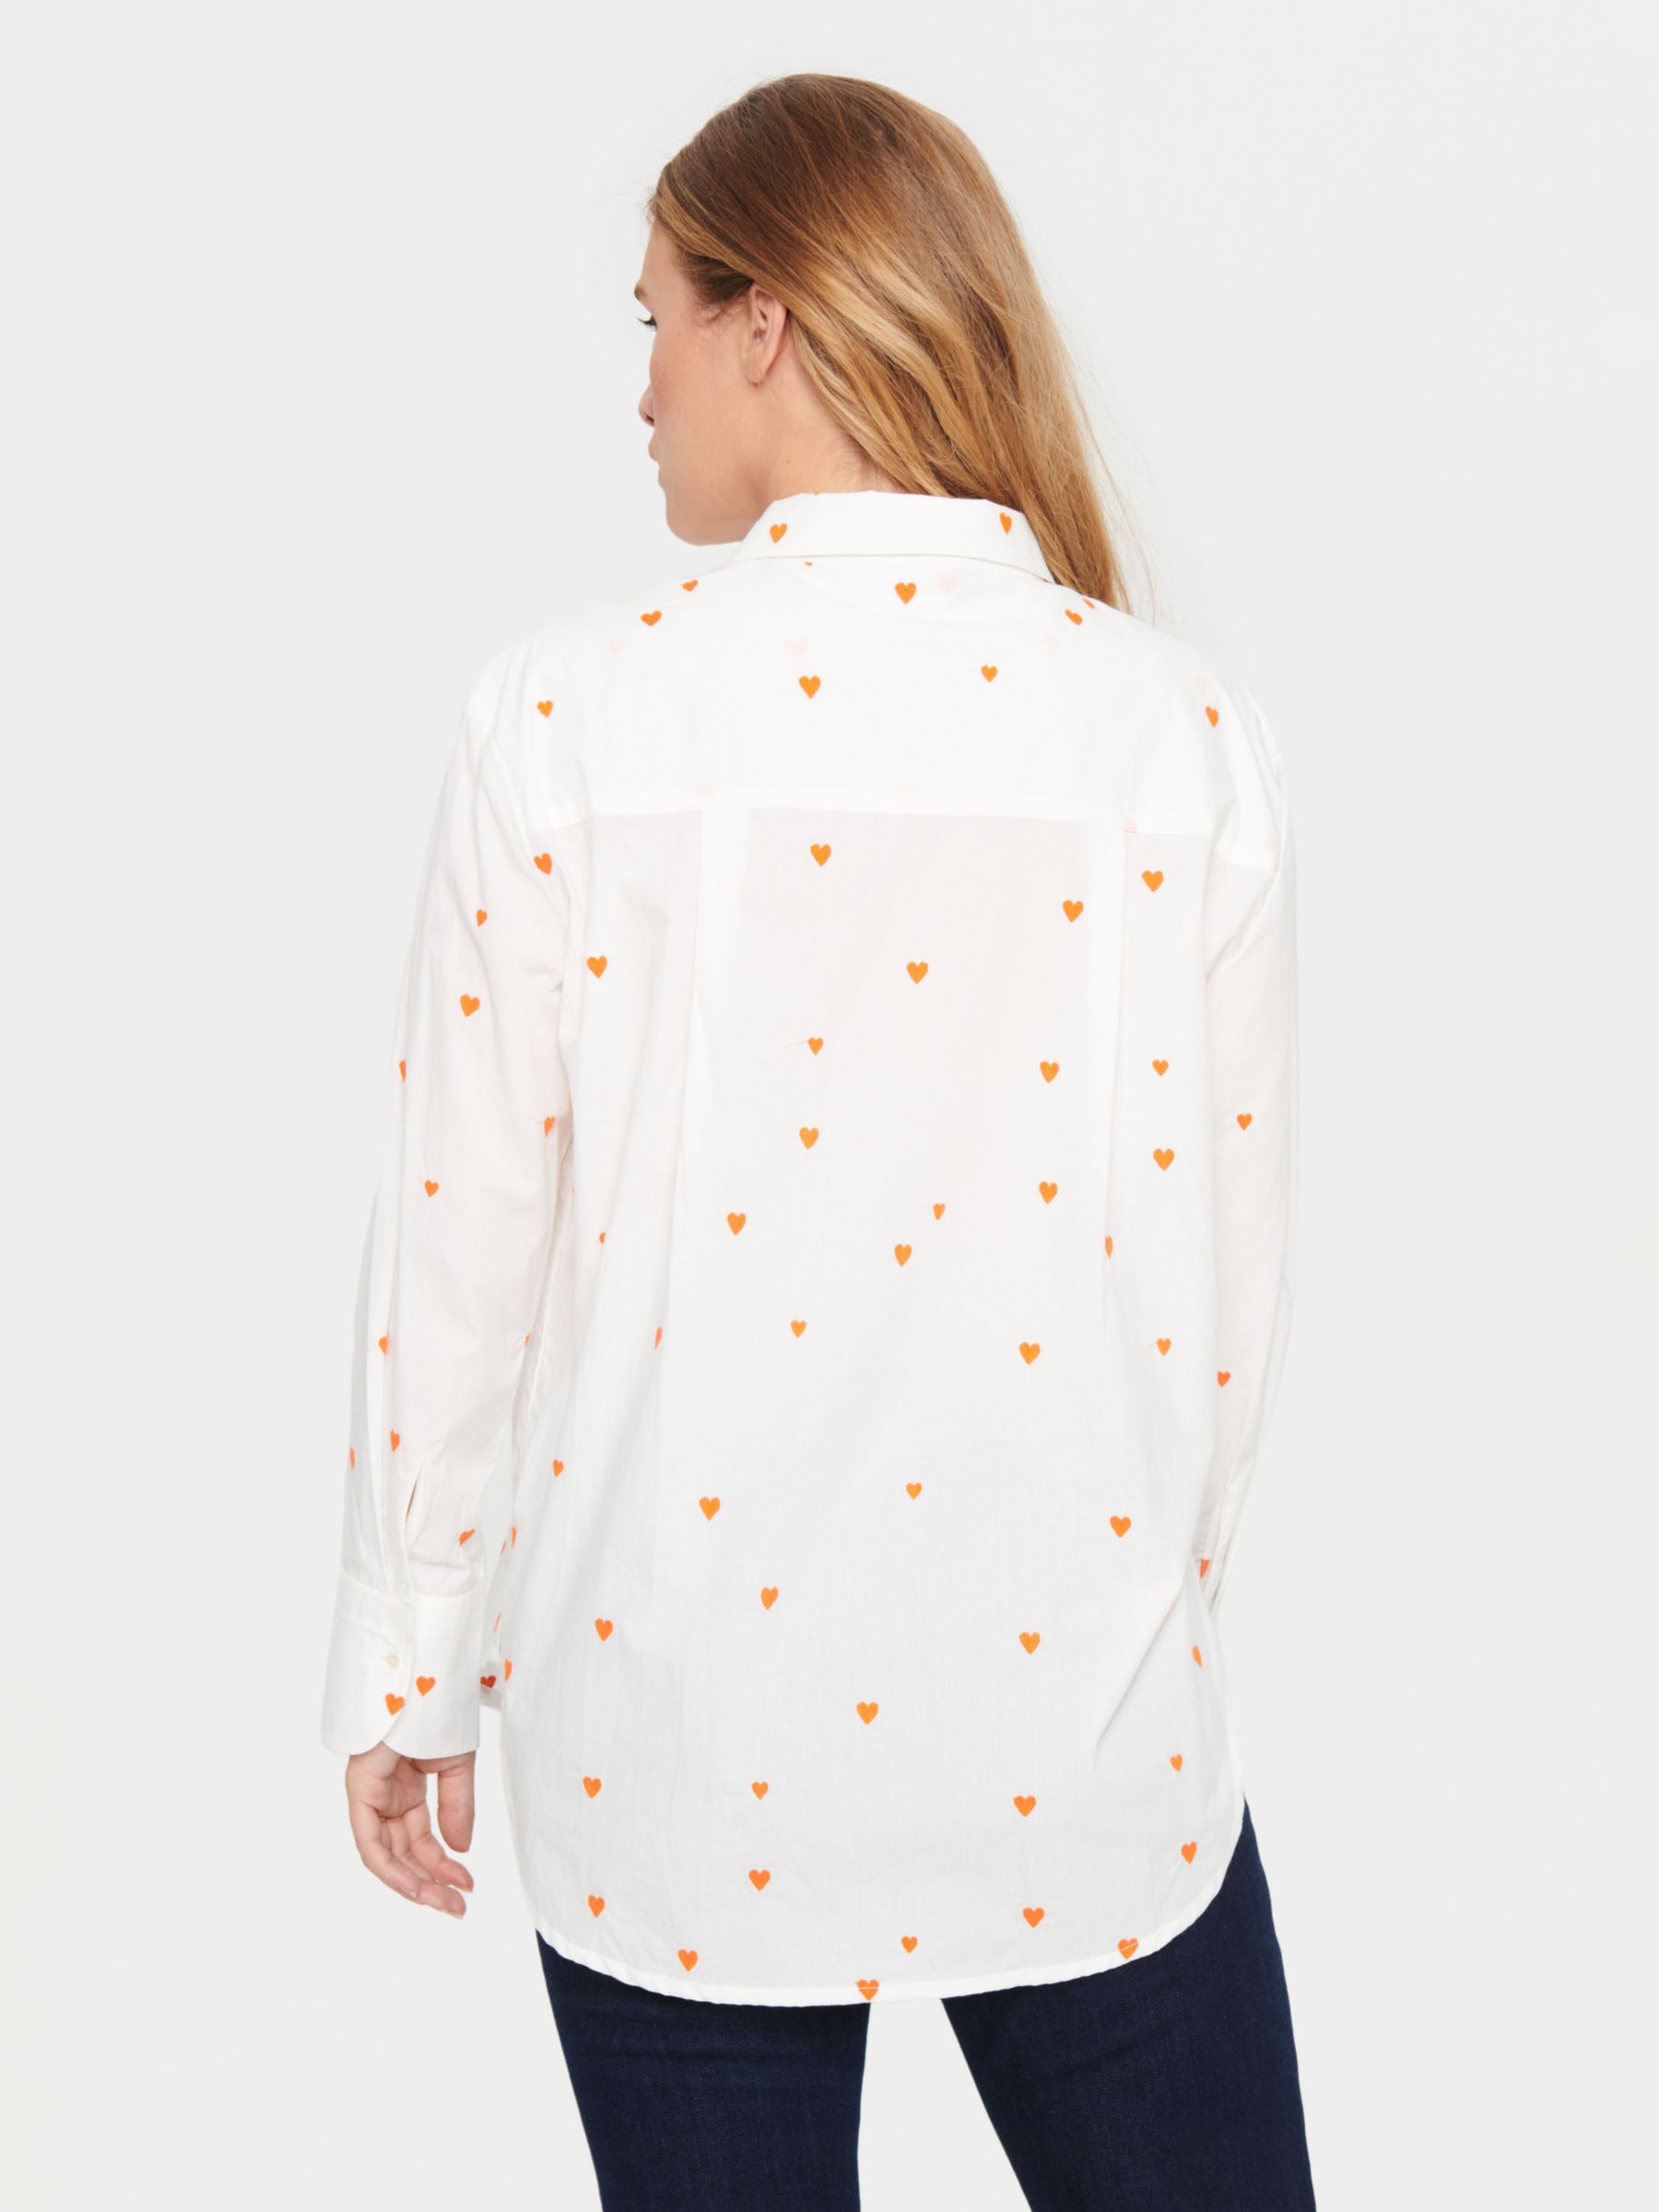 Buy Saint Tropez Dianne Heart Print Cotton Shirt, White/Tigerlily Online at johnlewis.com